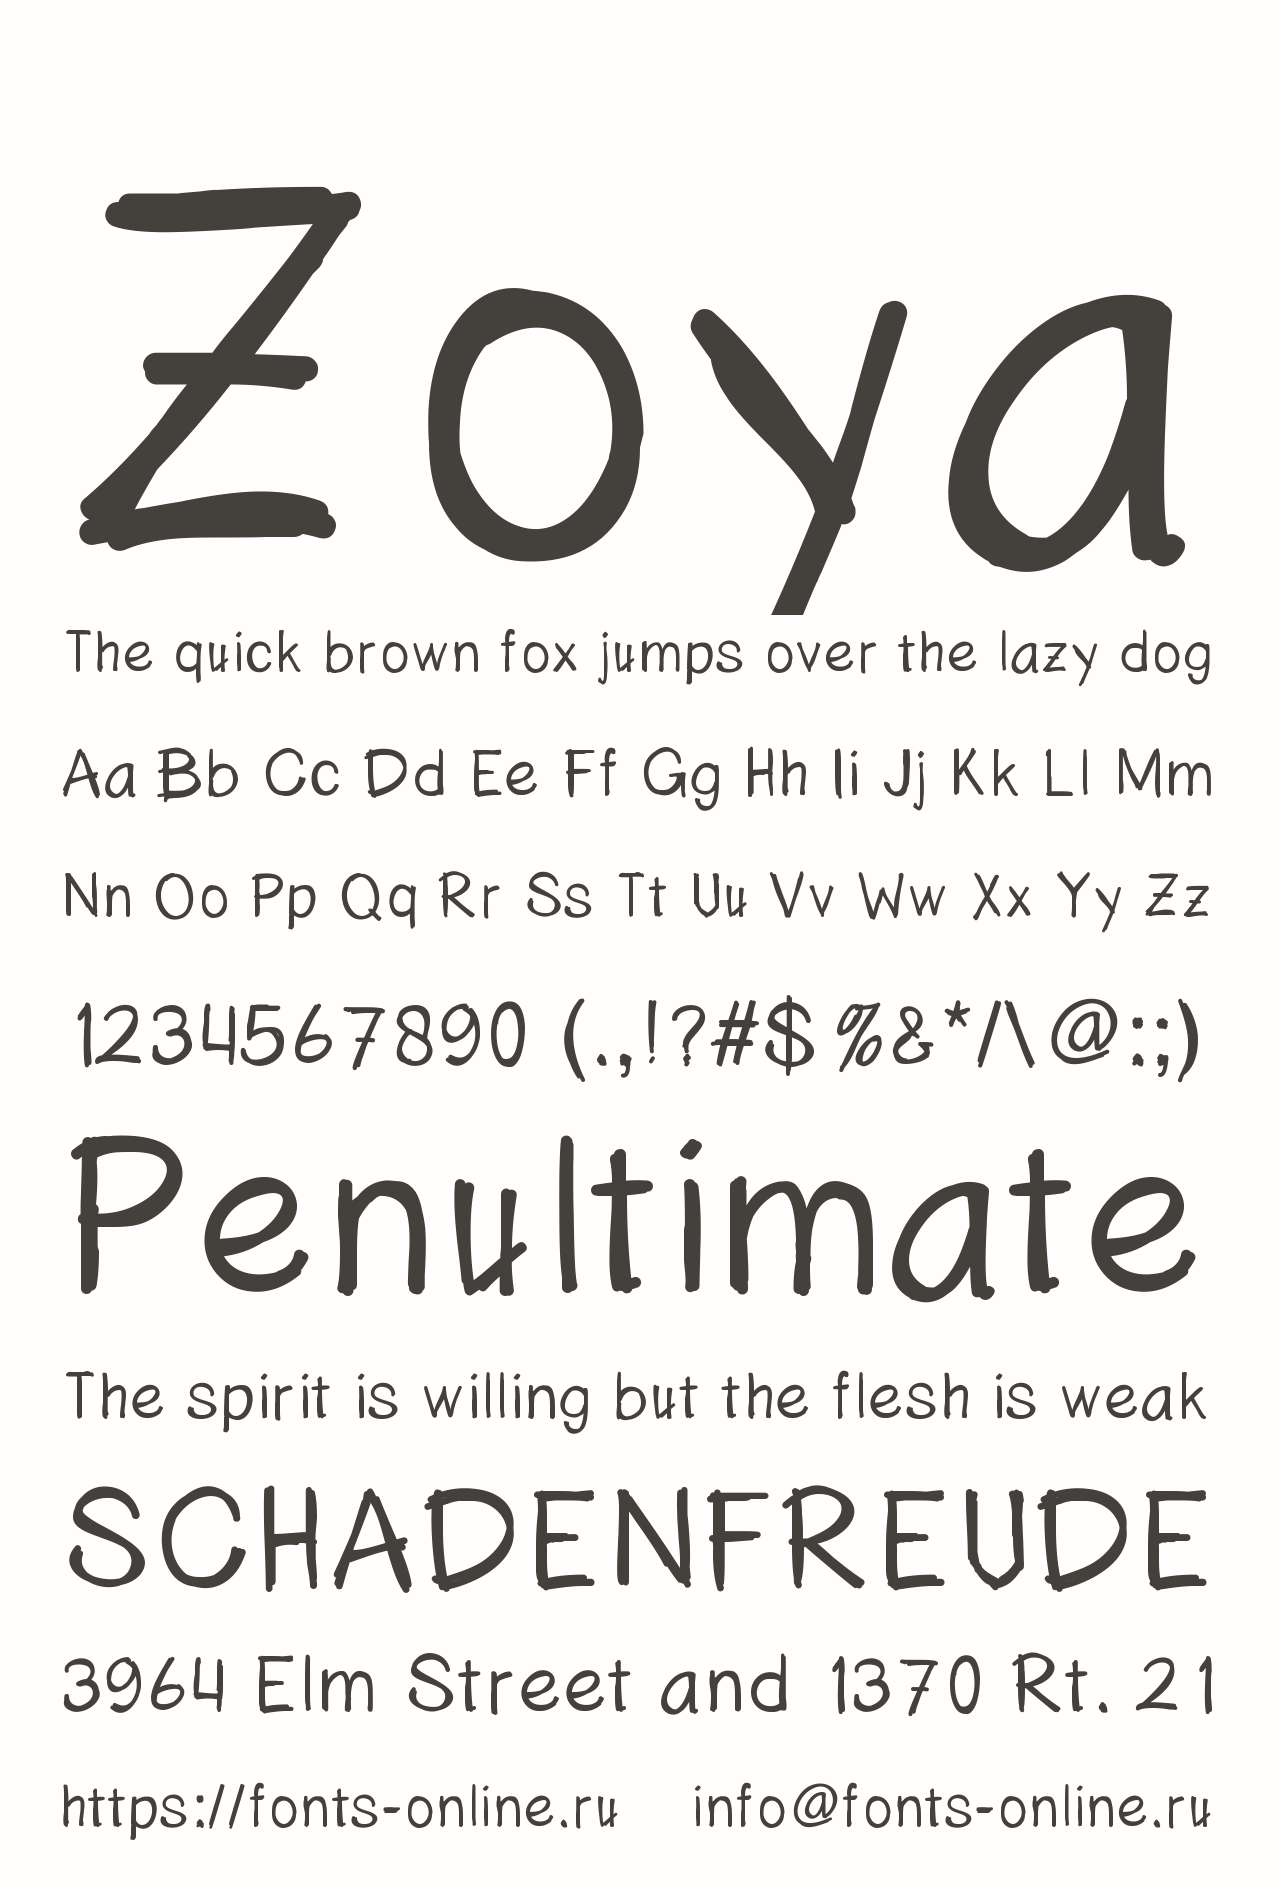 Шрифт Zoya